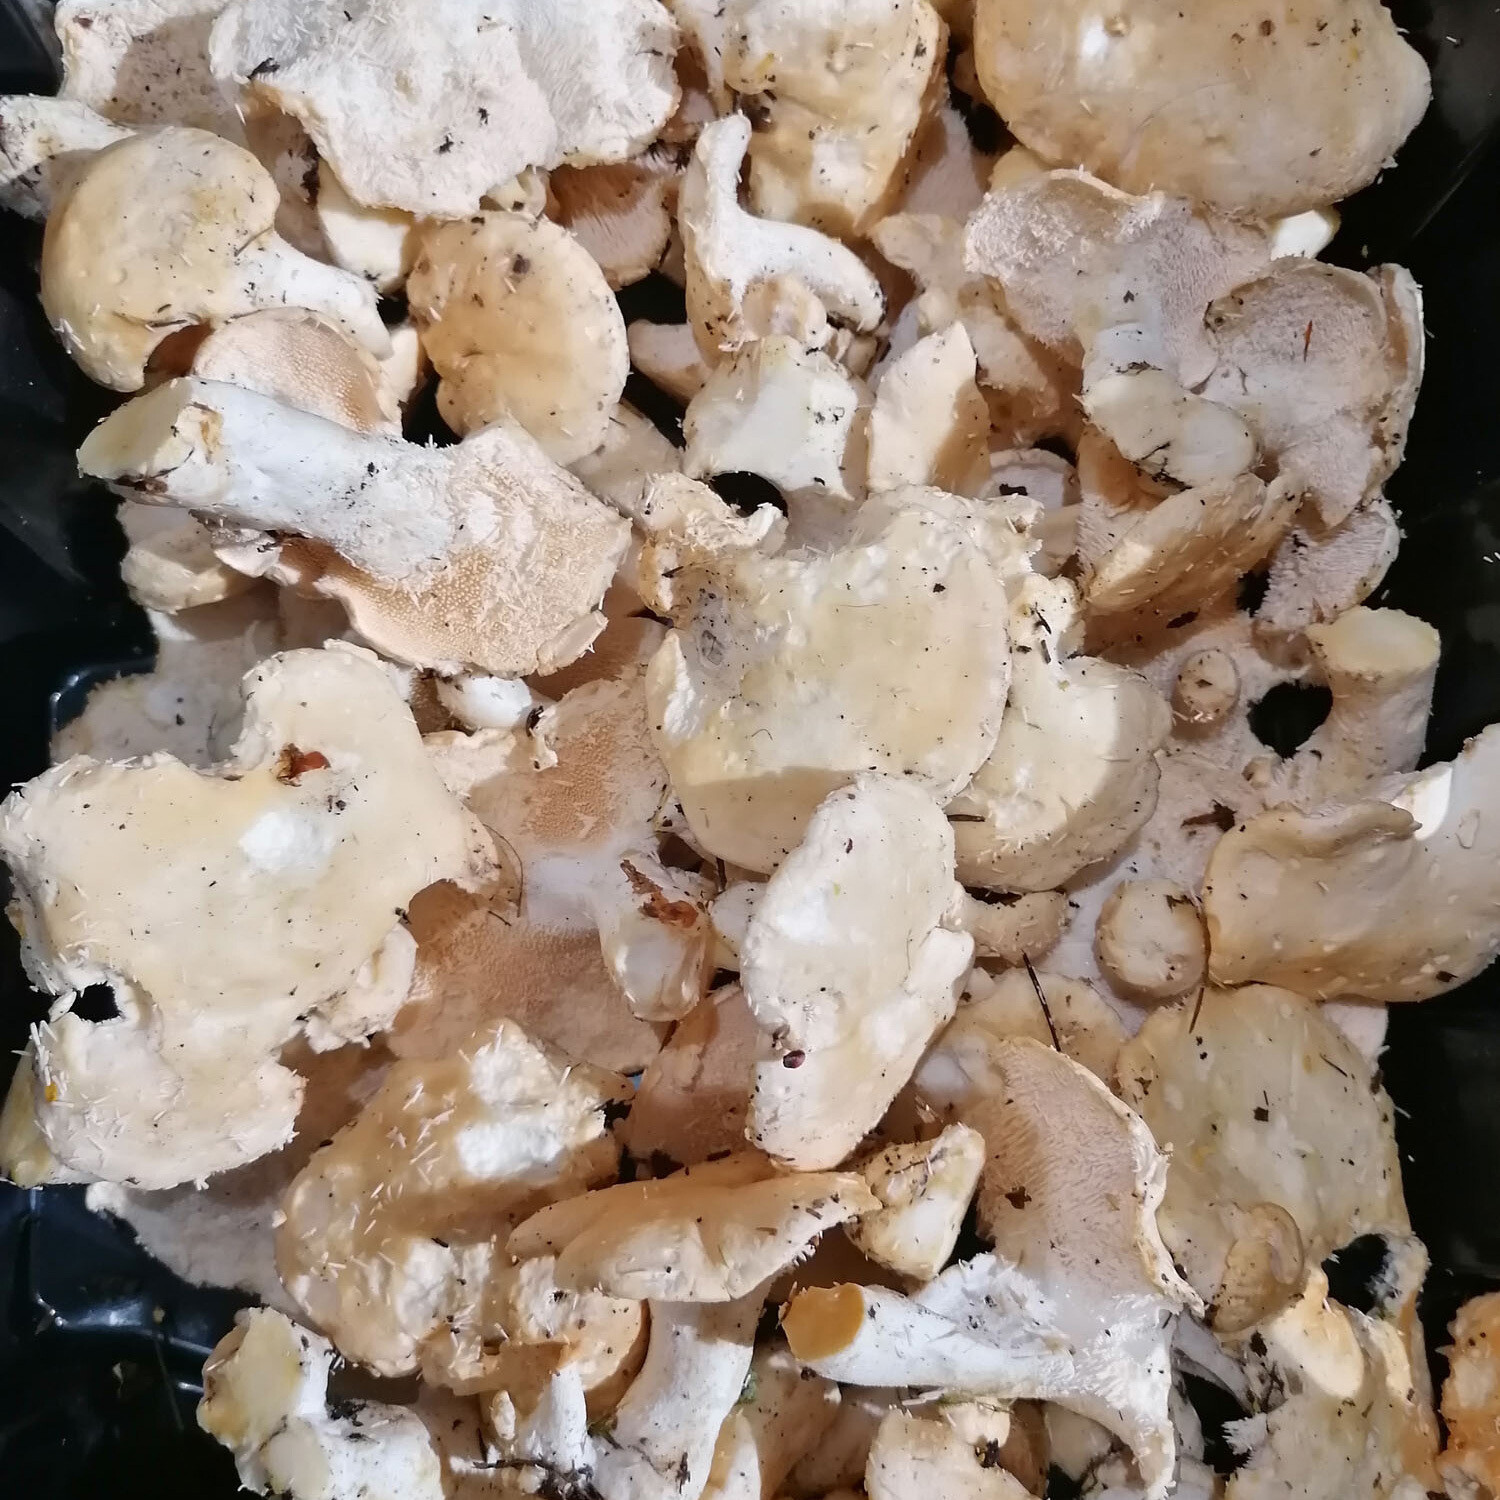 Hedgehog Mushrooms/Pied deMouton